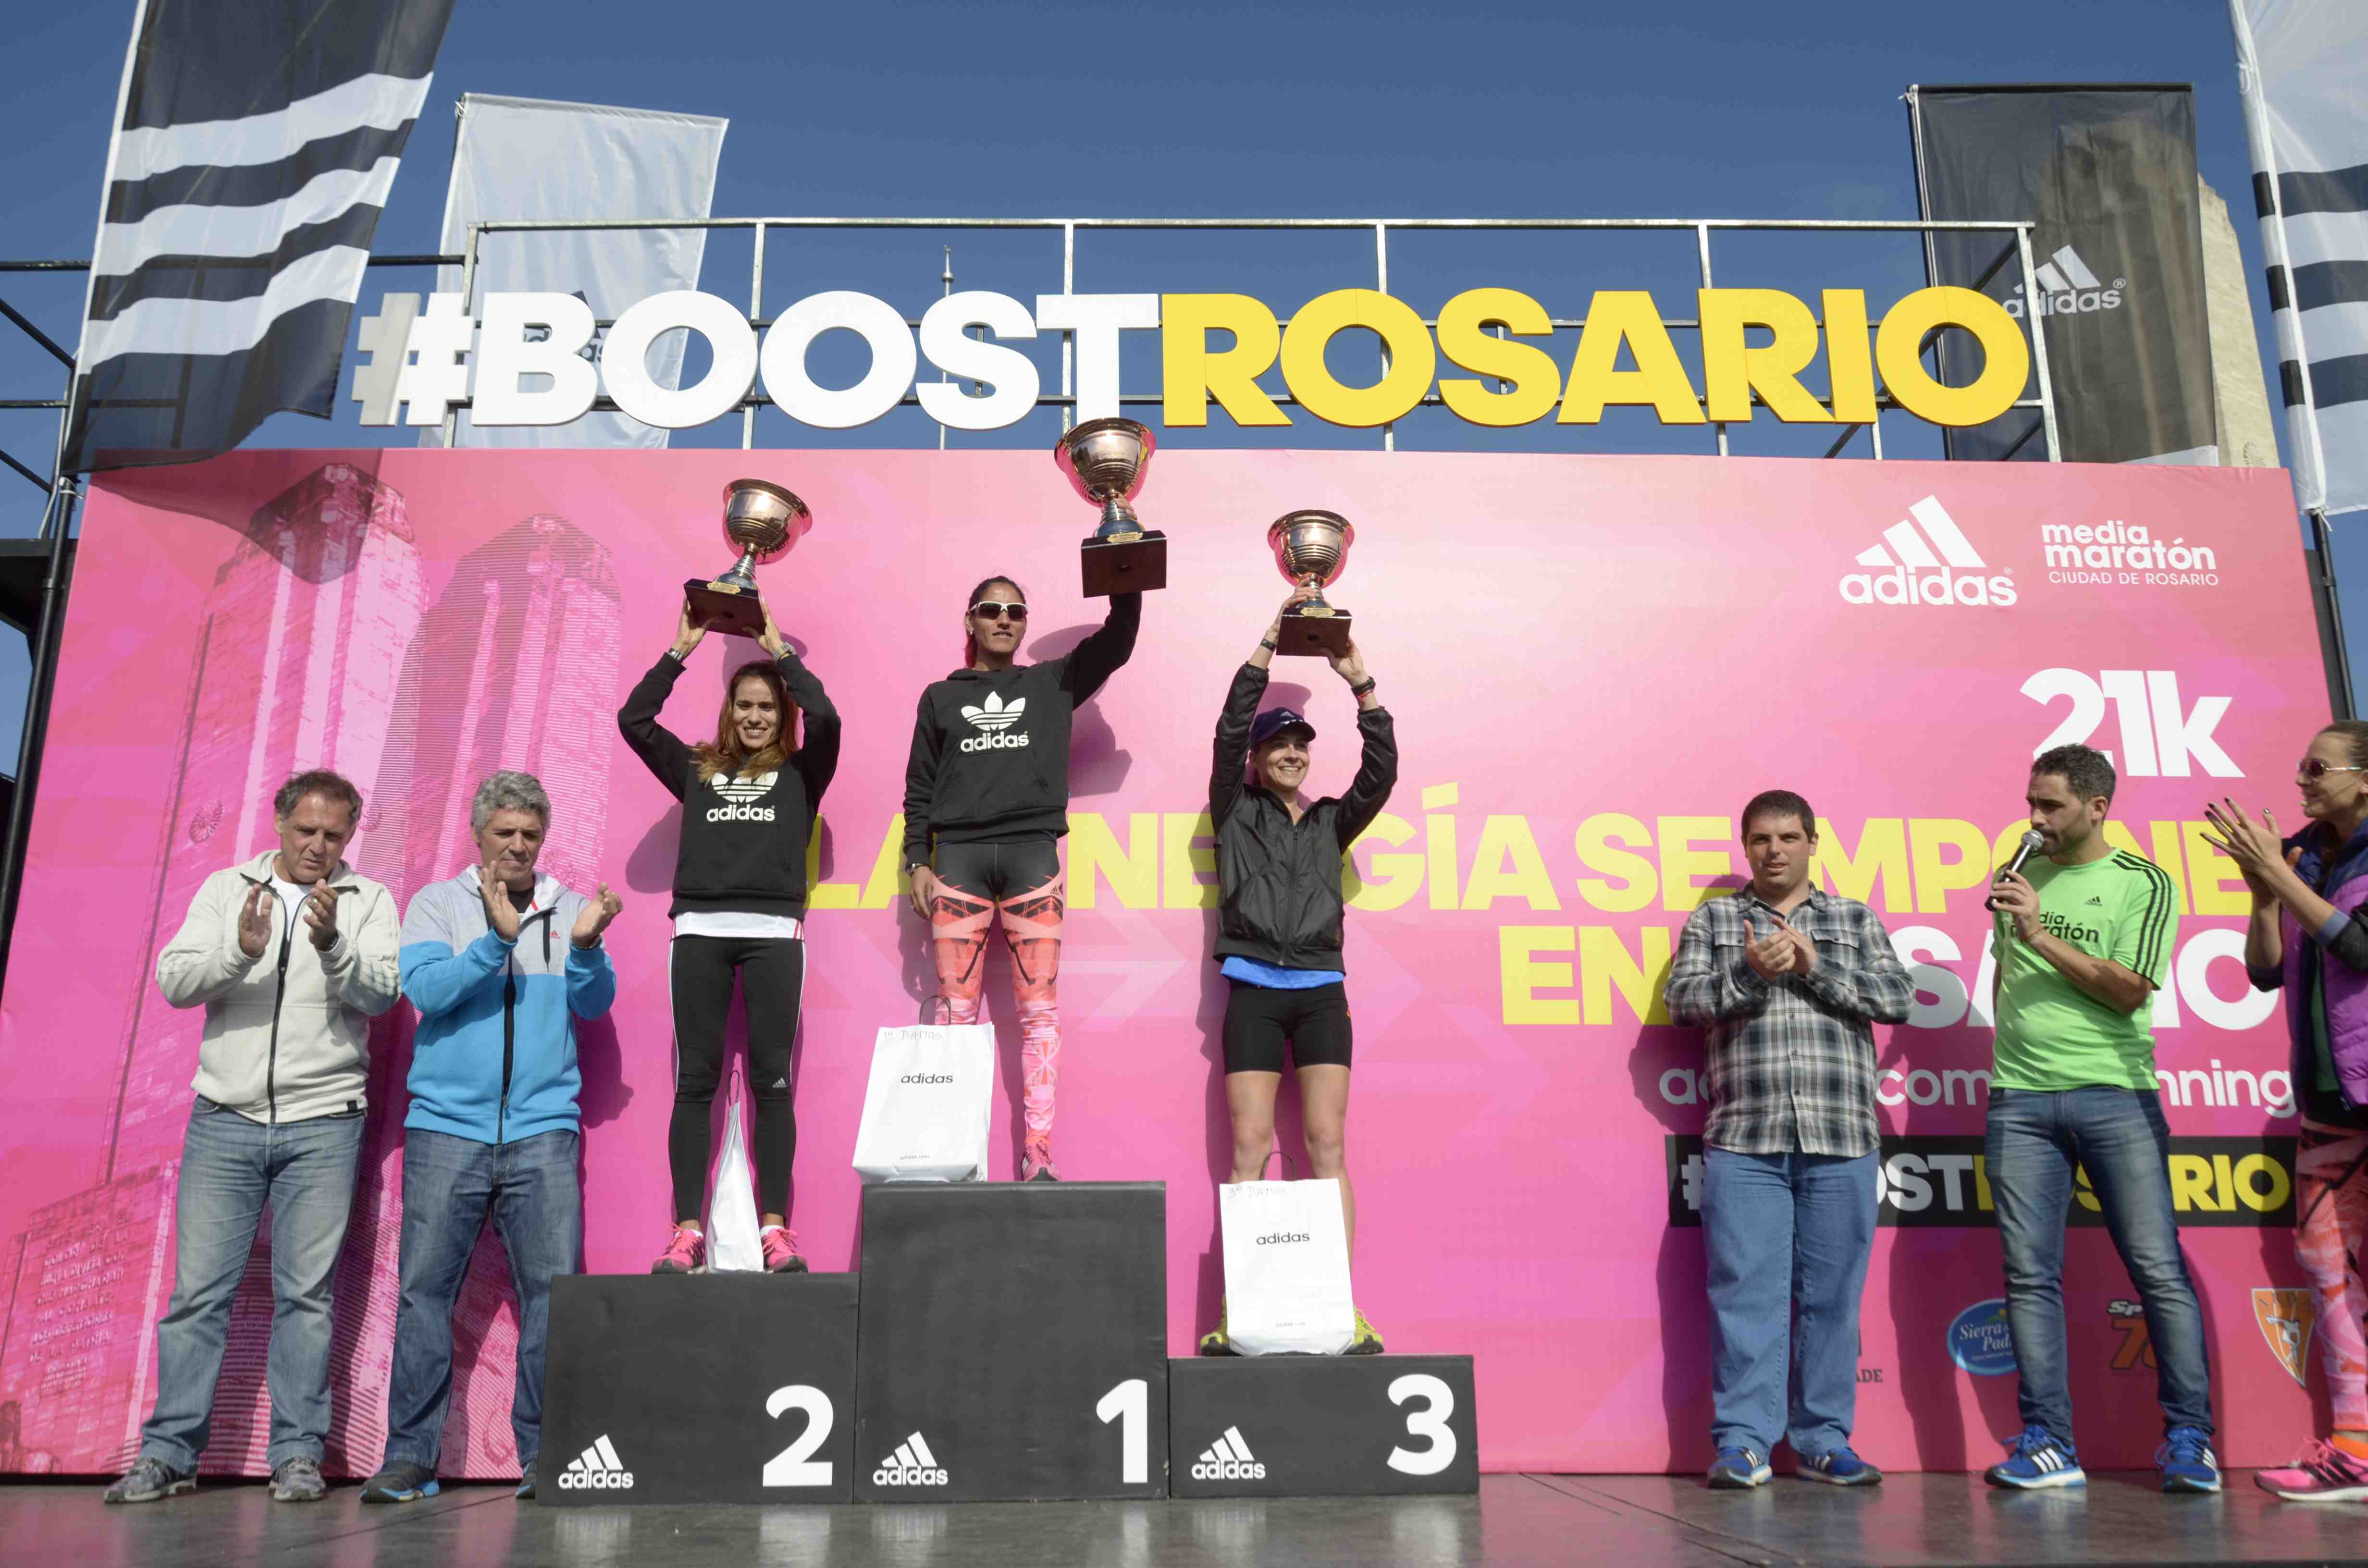 Podio Femenino - Media Maraton adidas Rosario